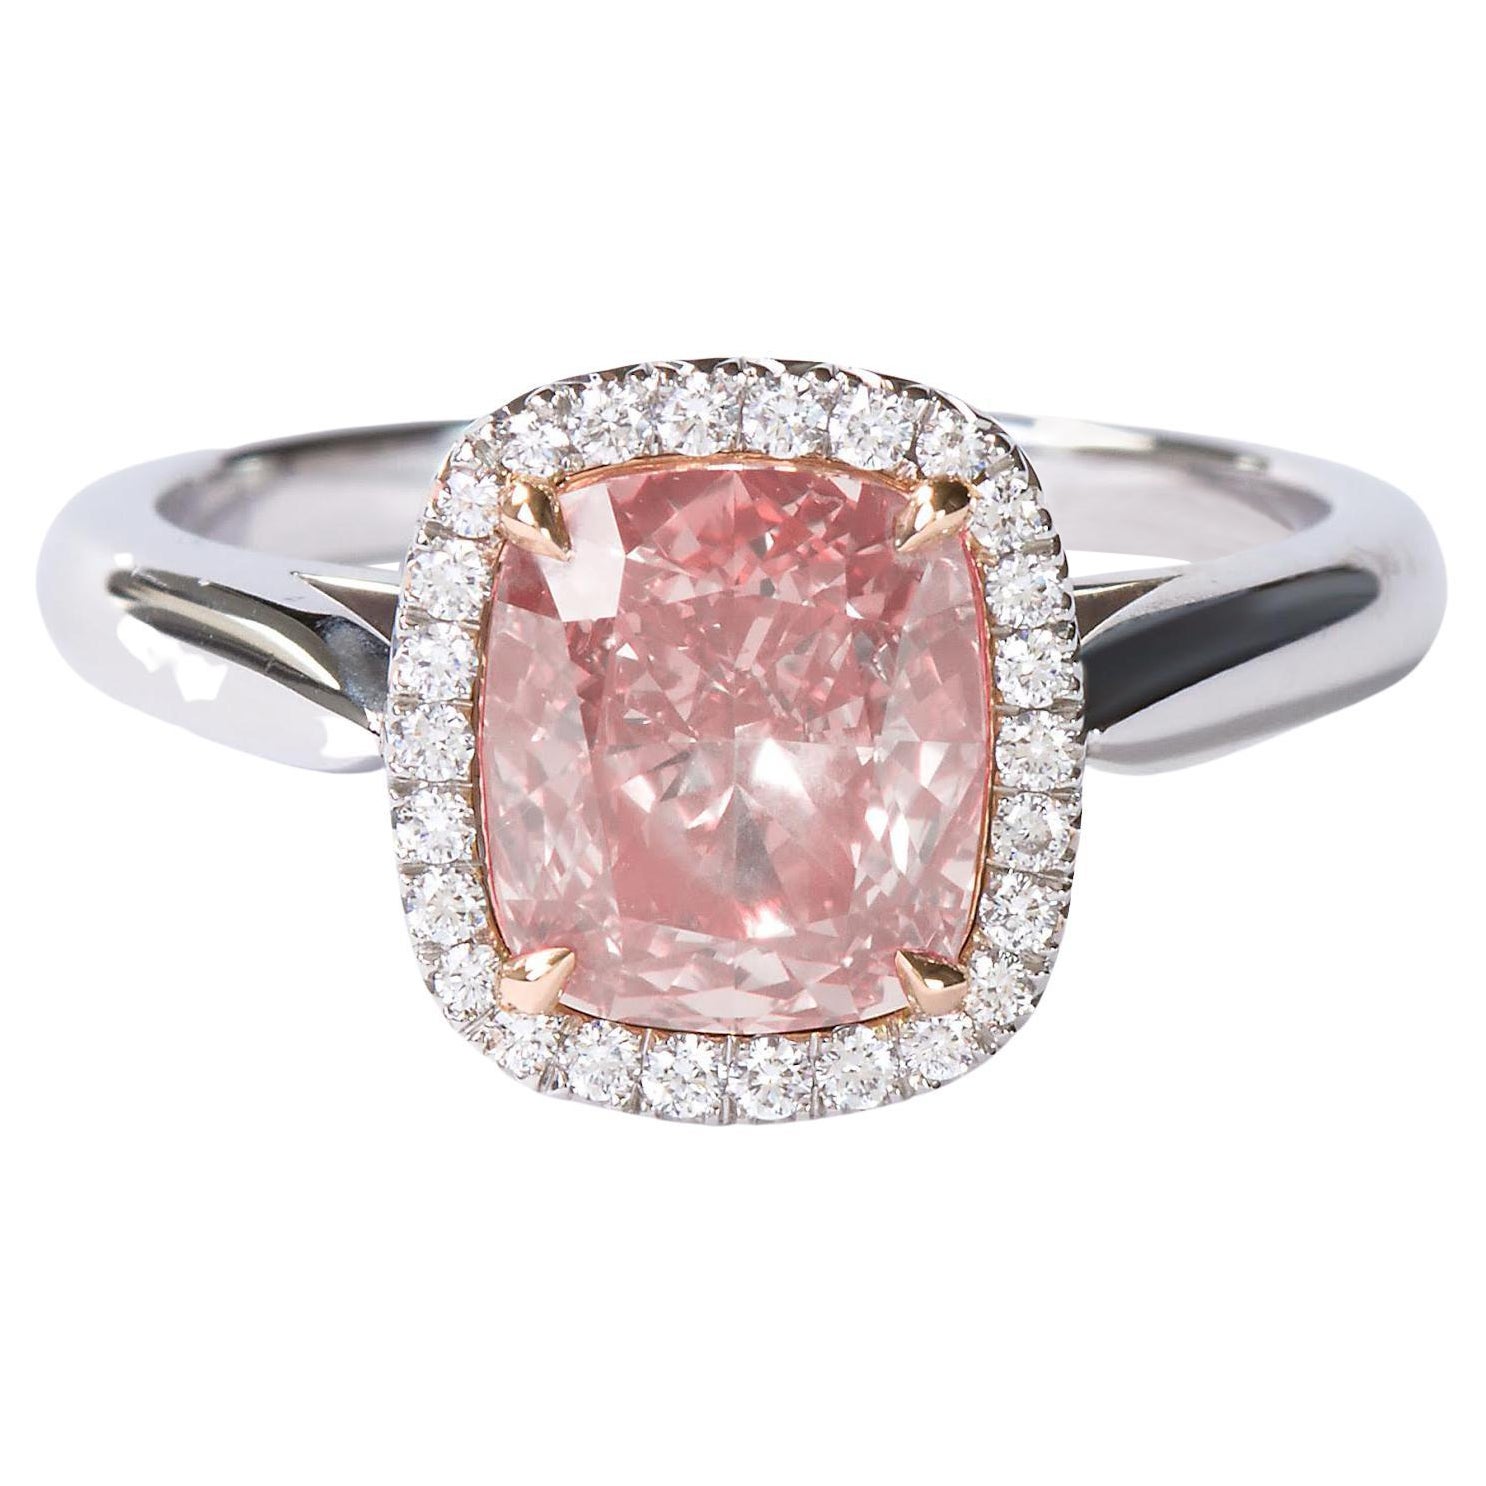 Issac Nussbaum 2.02 Carat Pink Diamond Engagement Ring For Sale